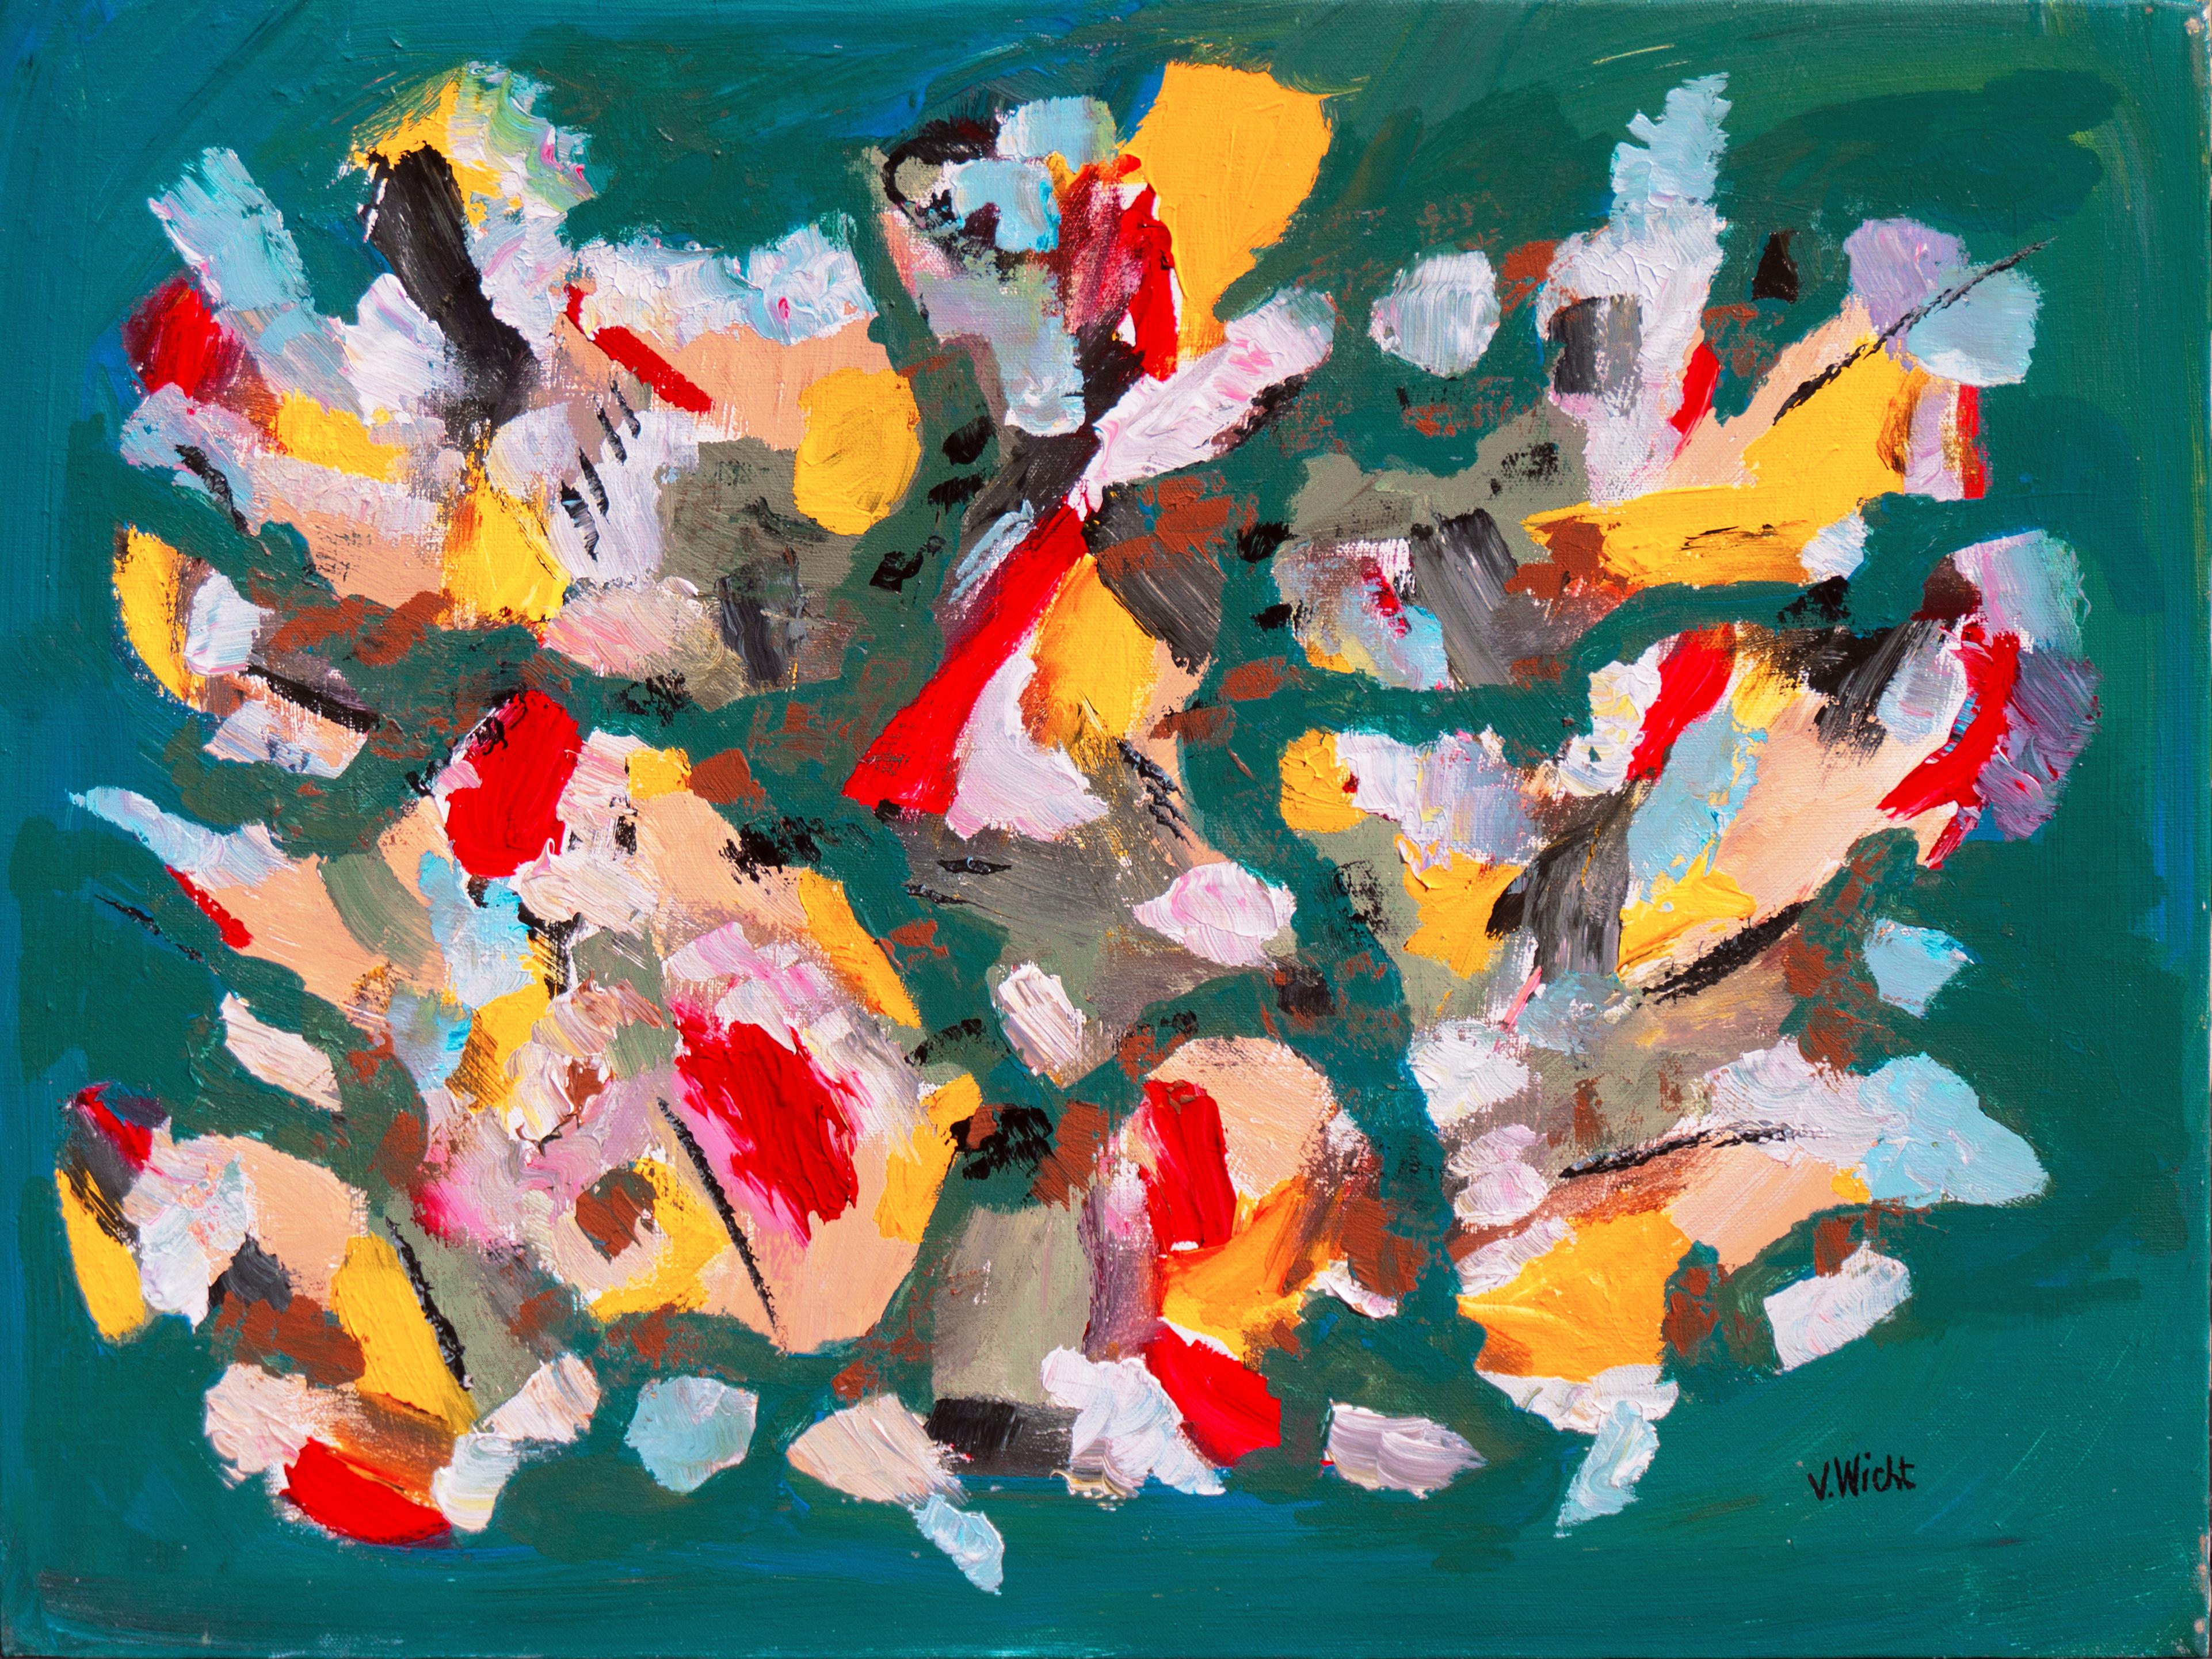 Abstract Painting John von Wicht - Abstrait en safran et tourmaline", École de New York, WPA